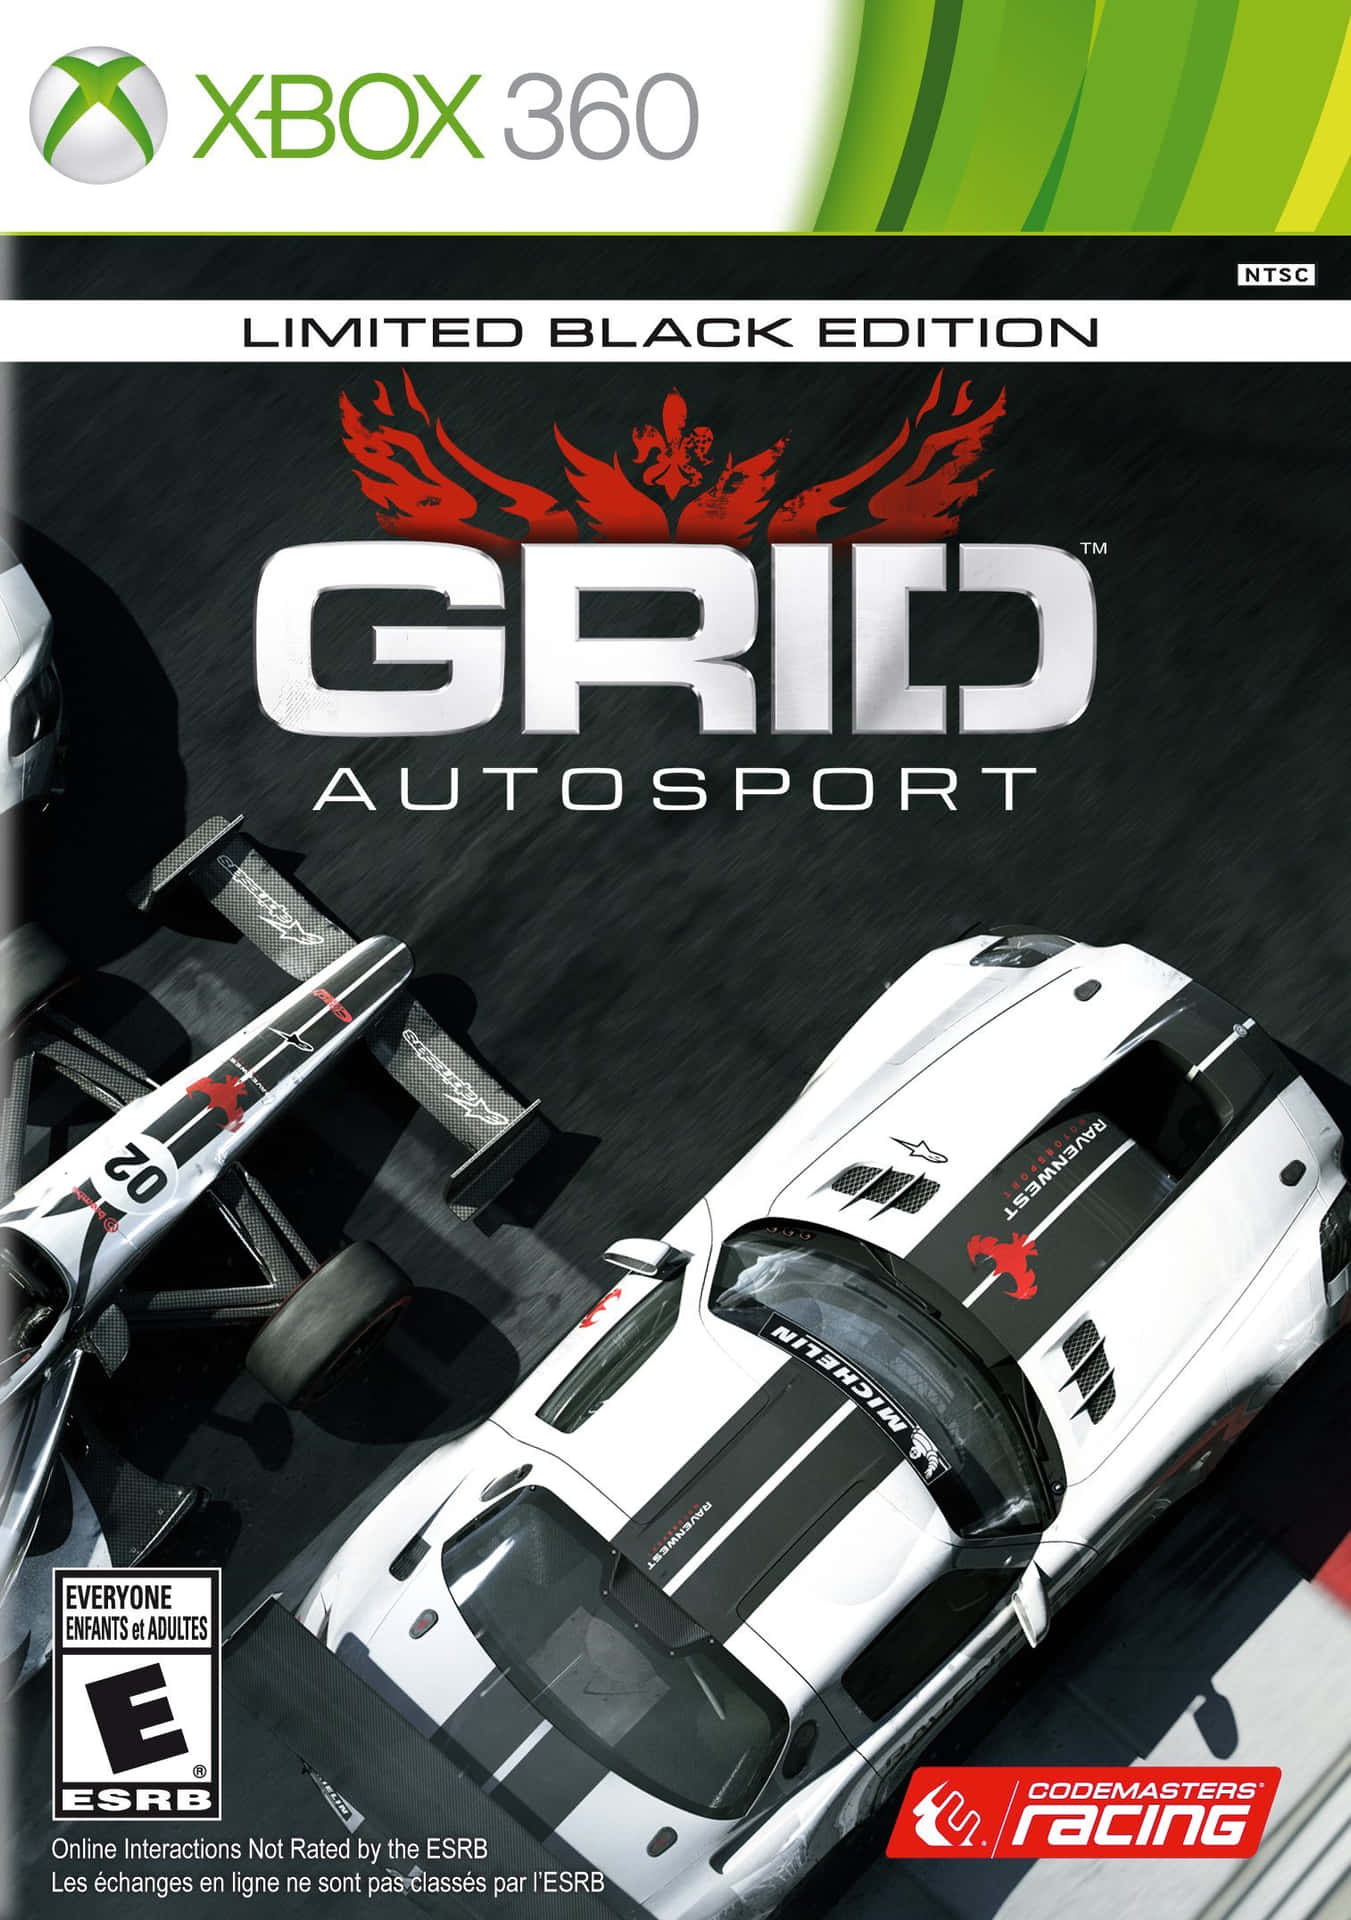 Iphone X Grid Autosport Background In Xbox 360 Background